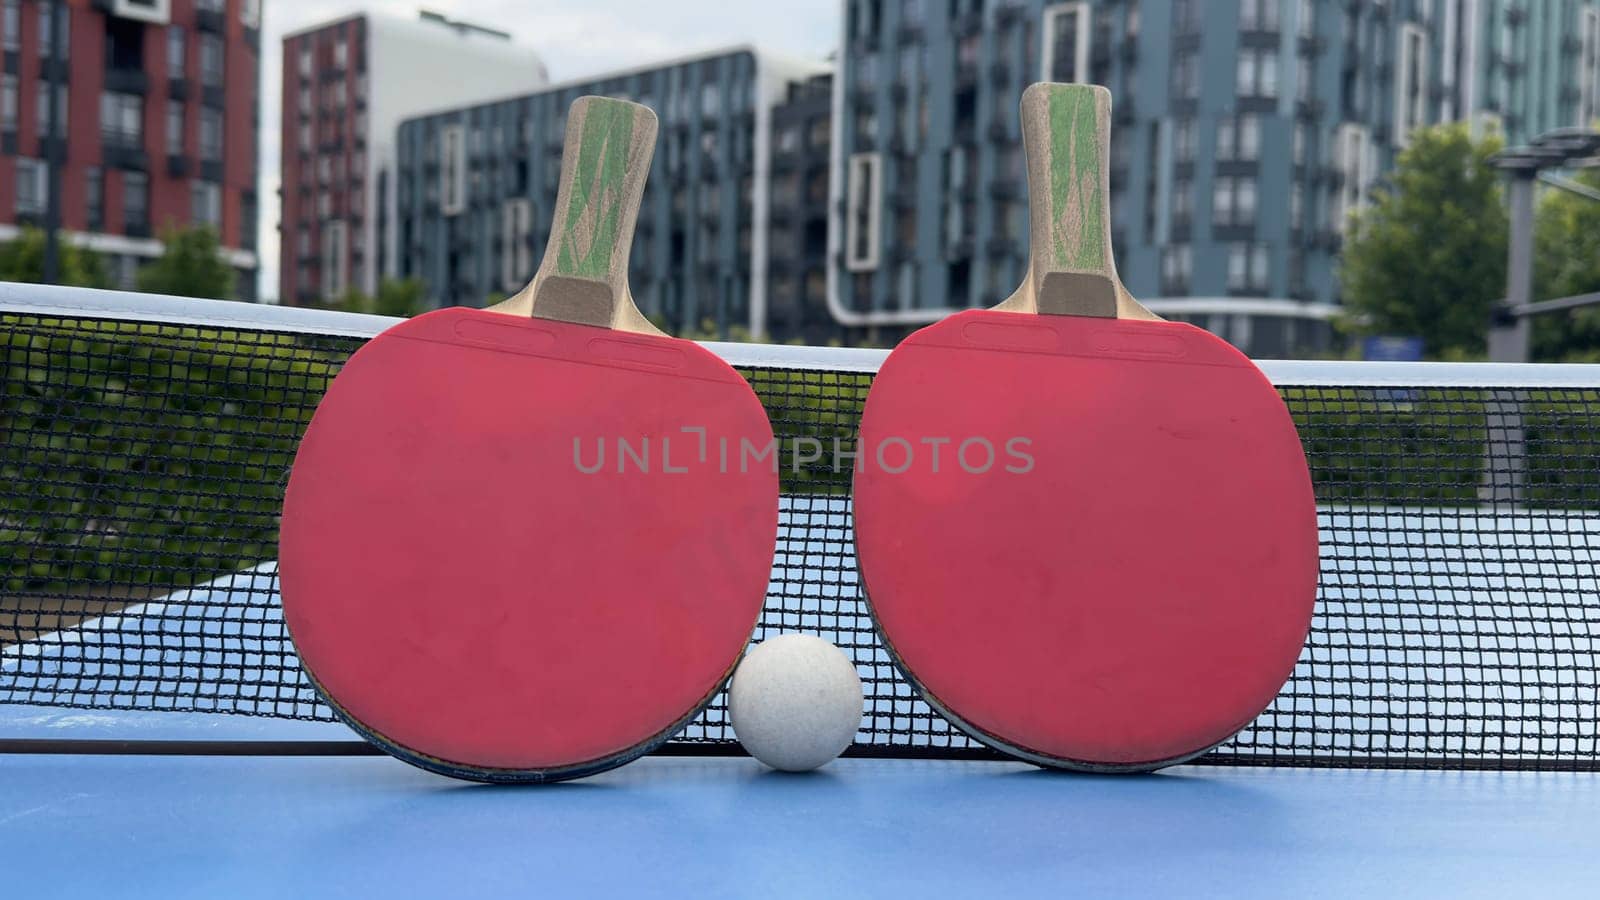 Minimal photos of table tennis by Andelov13